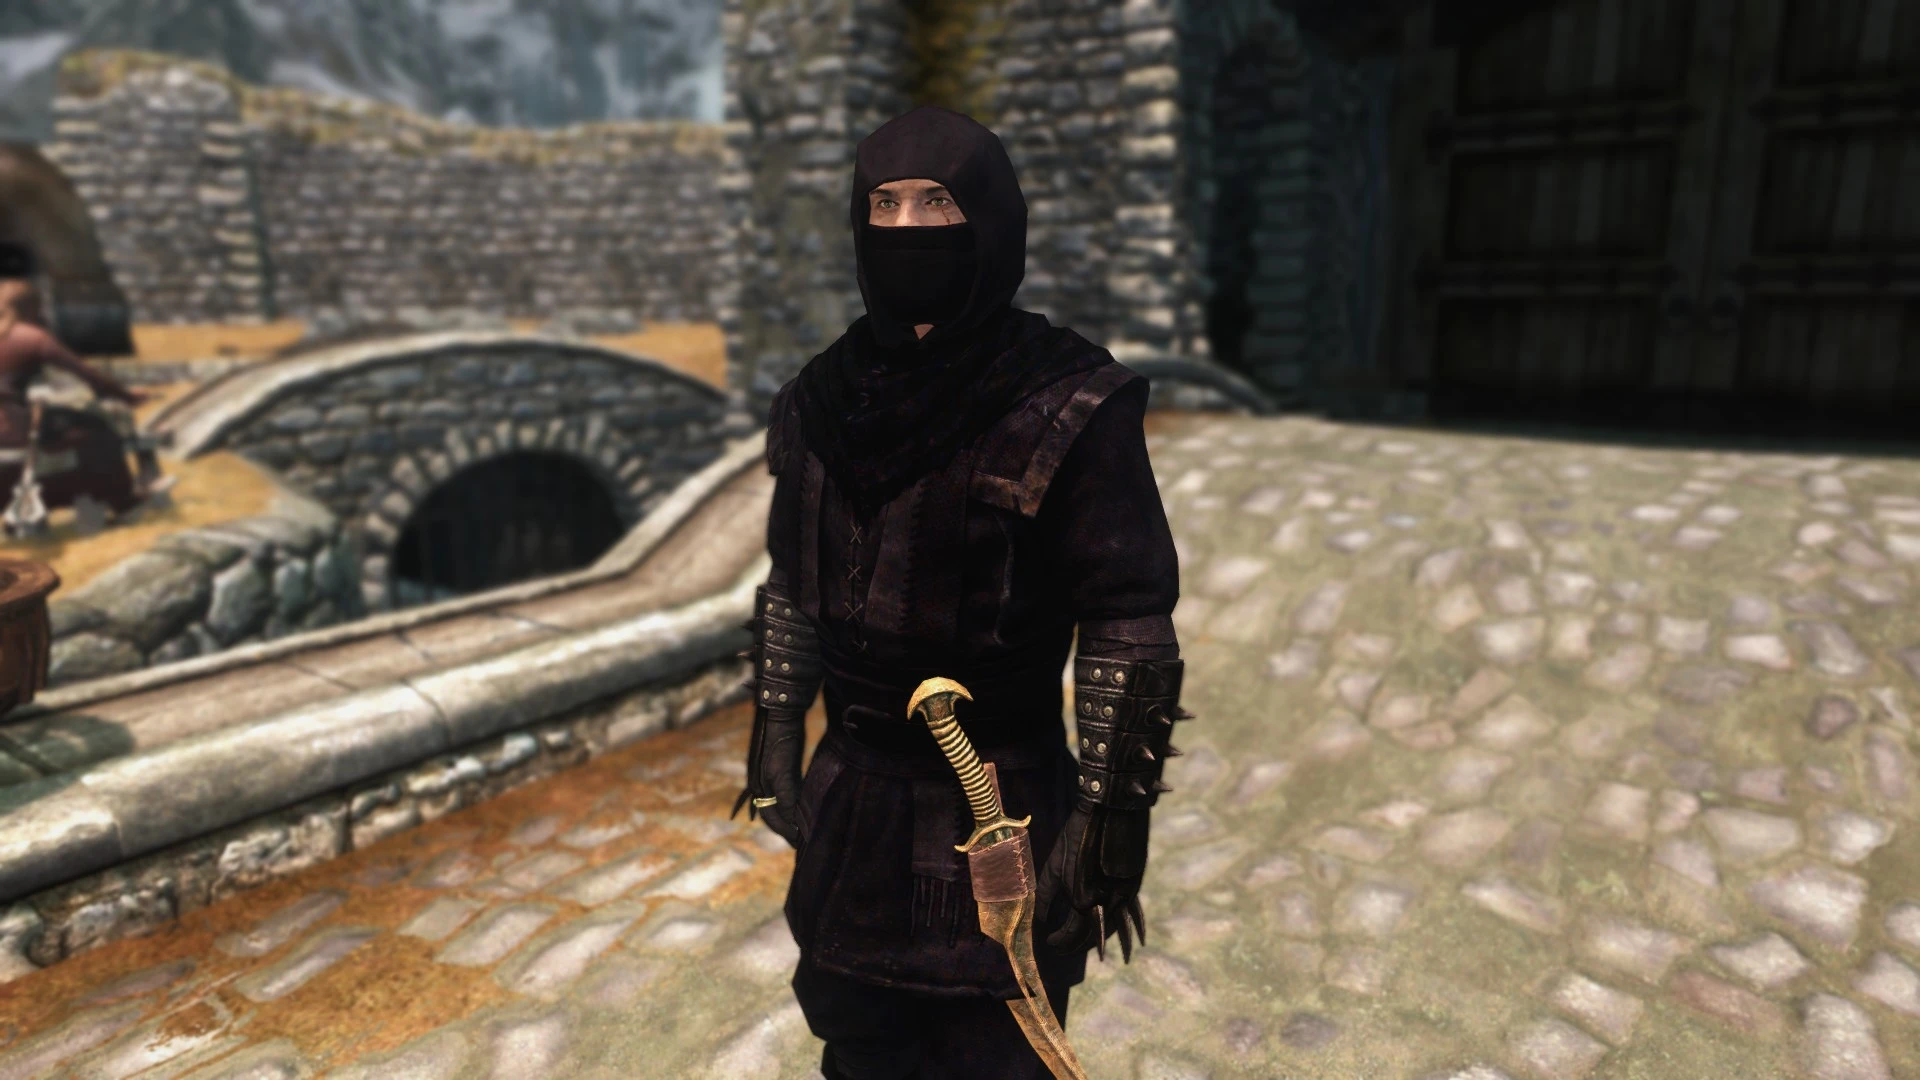 corvo s mask and armor skyrim mod requests the nexus.